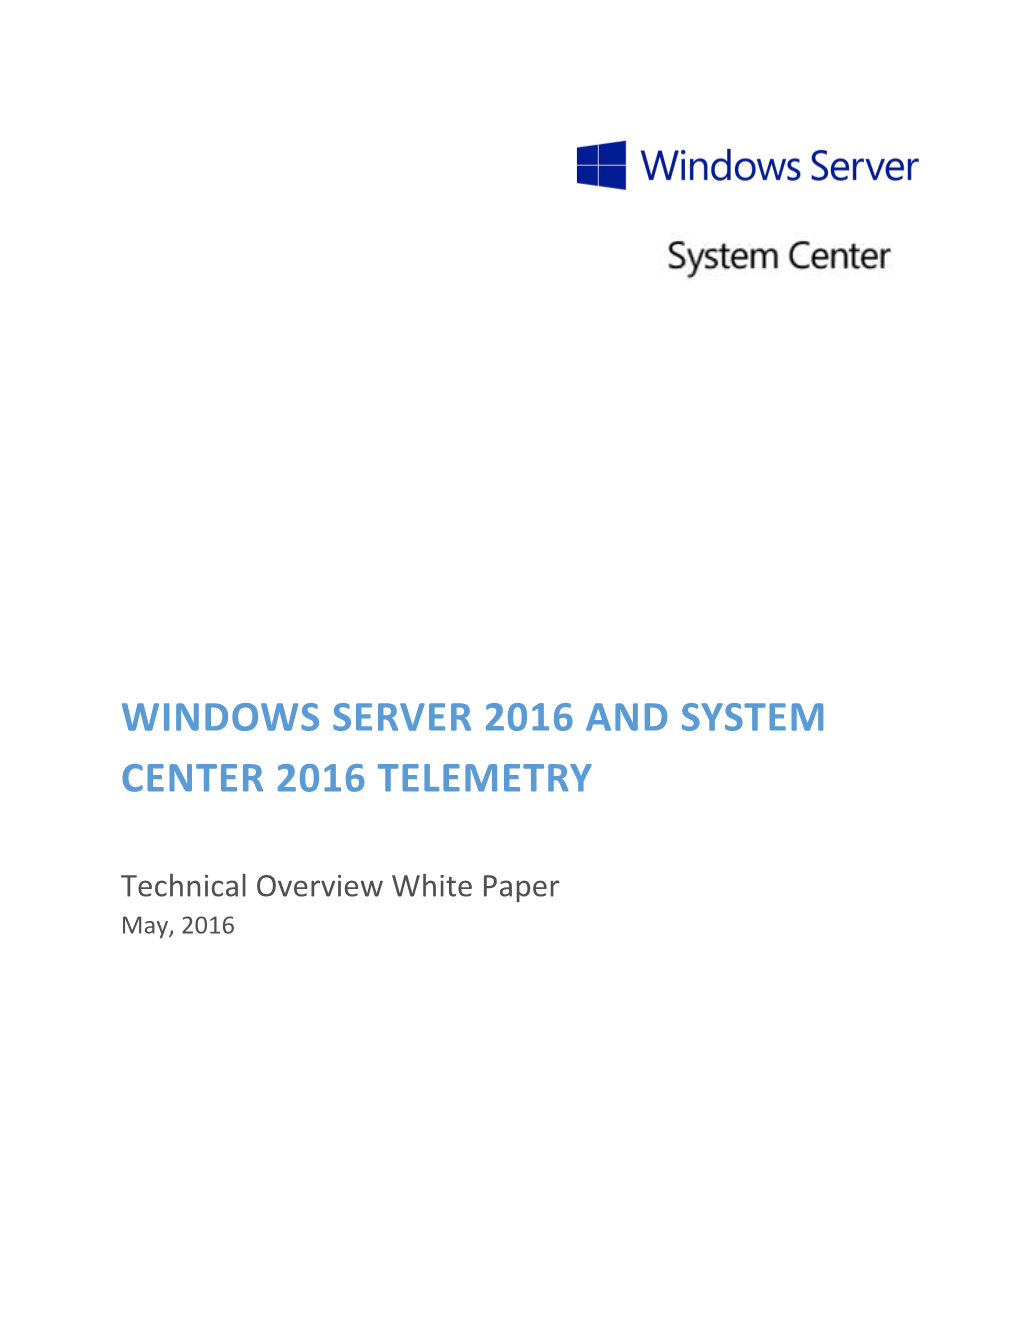 WINDOWS SERVER 2016 and System Center 2016 TELEMETRY